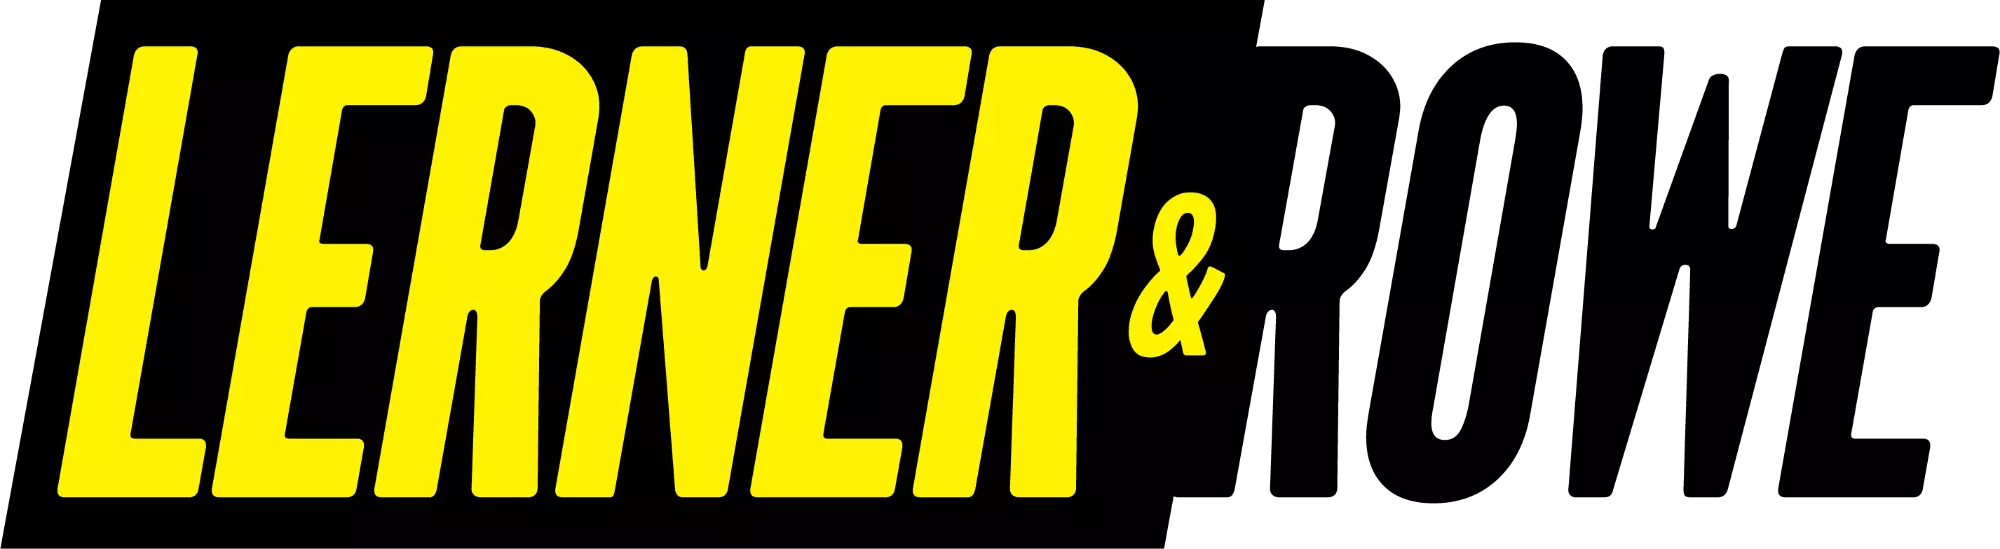 New Lerner & Rowe cutout logo